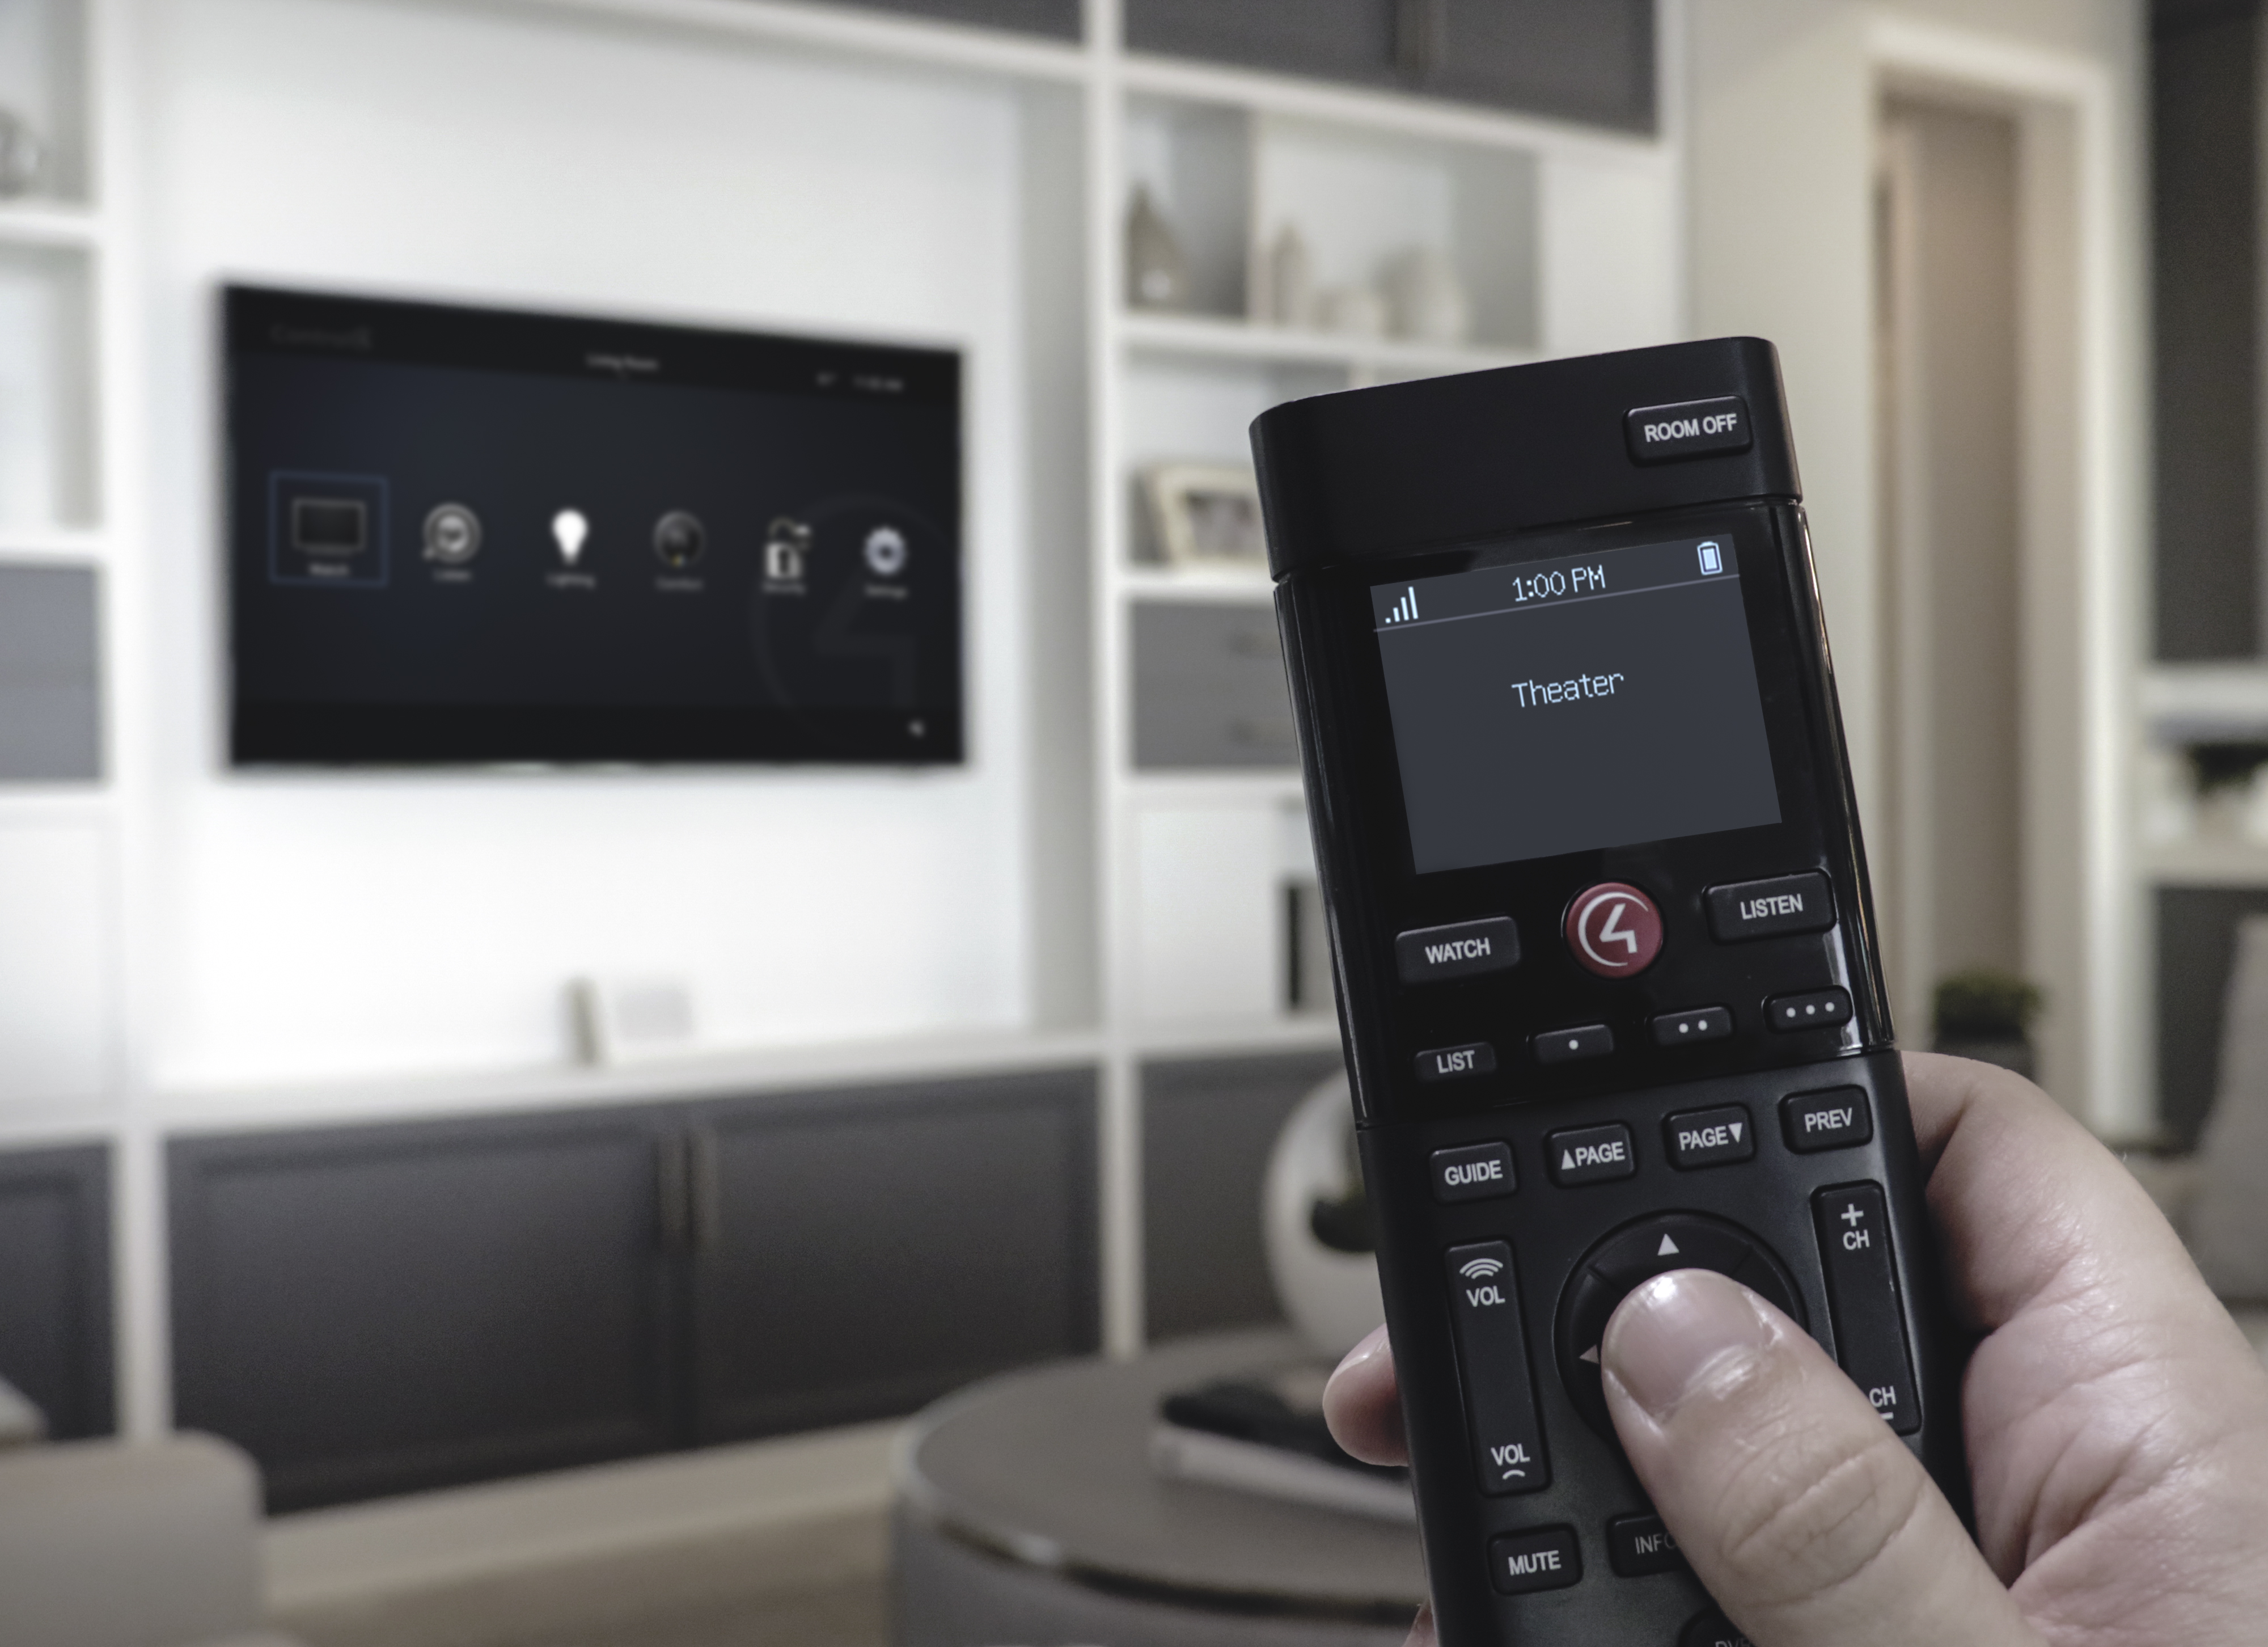 Control4 remote as a representation of smart remotes